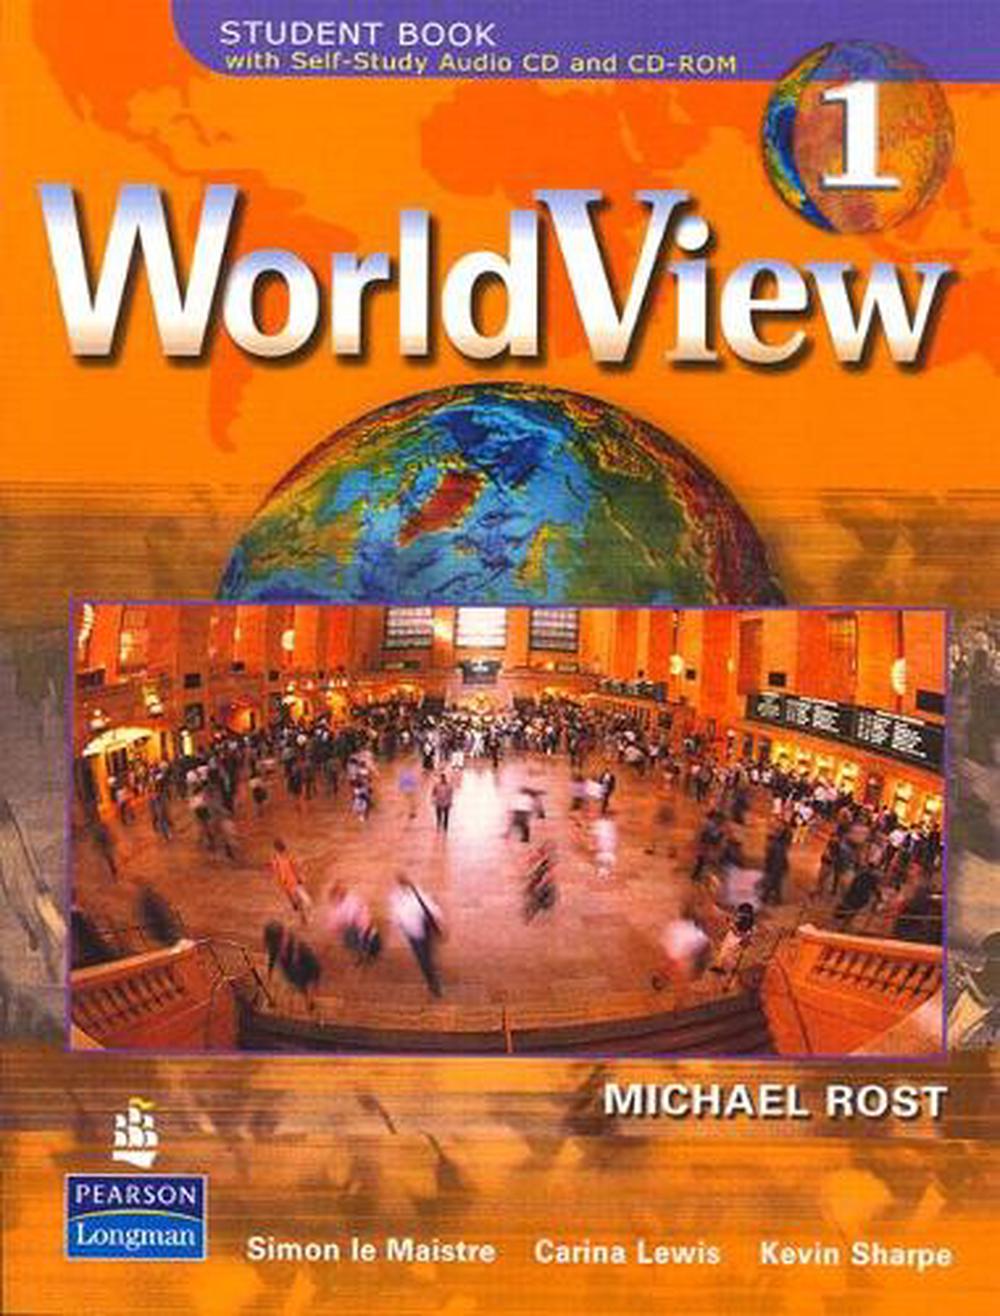 Wider World 2 teacher's book с диском самый дешевый. Metro student's book. Wonderful World 1. Workbook. A book about Worldview.